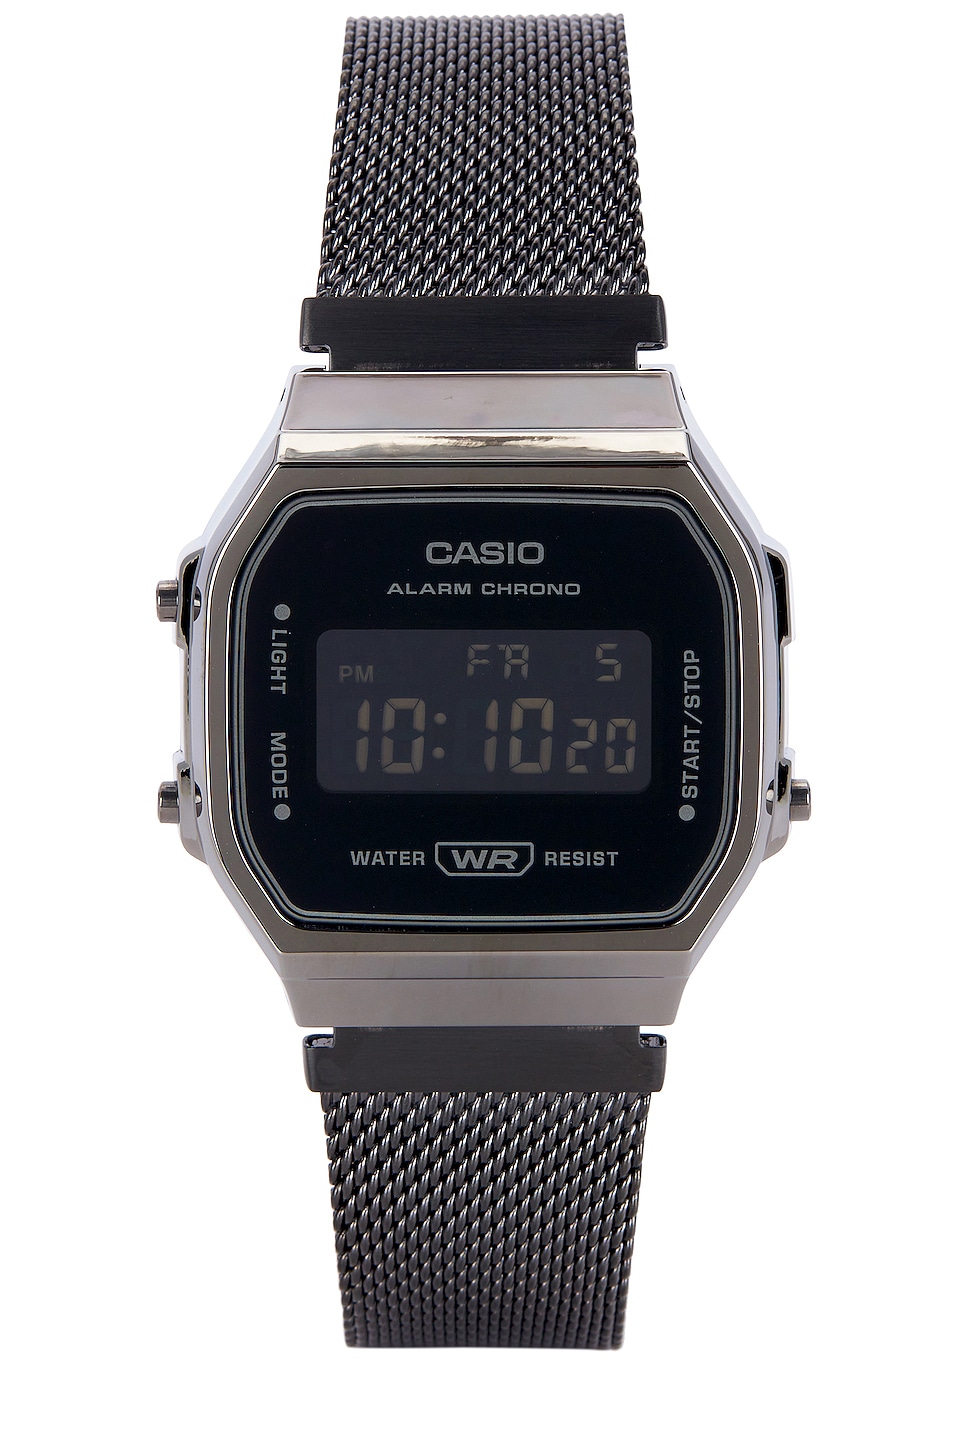 Casio Vintage A158WEA-1EF Vintage Series Watch